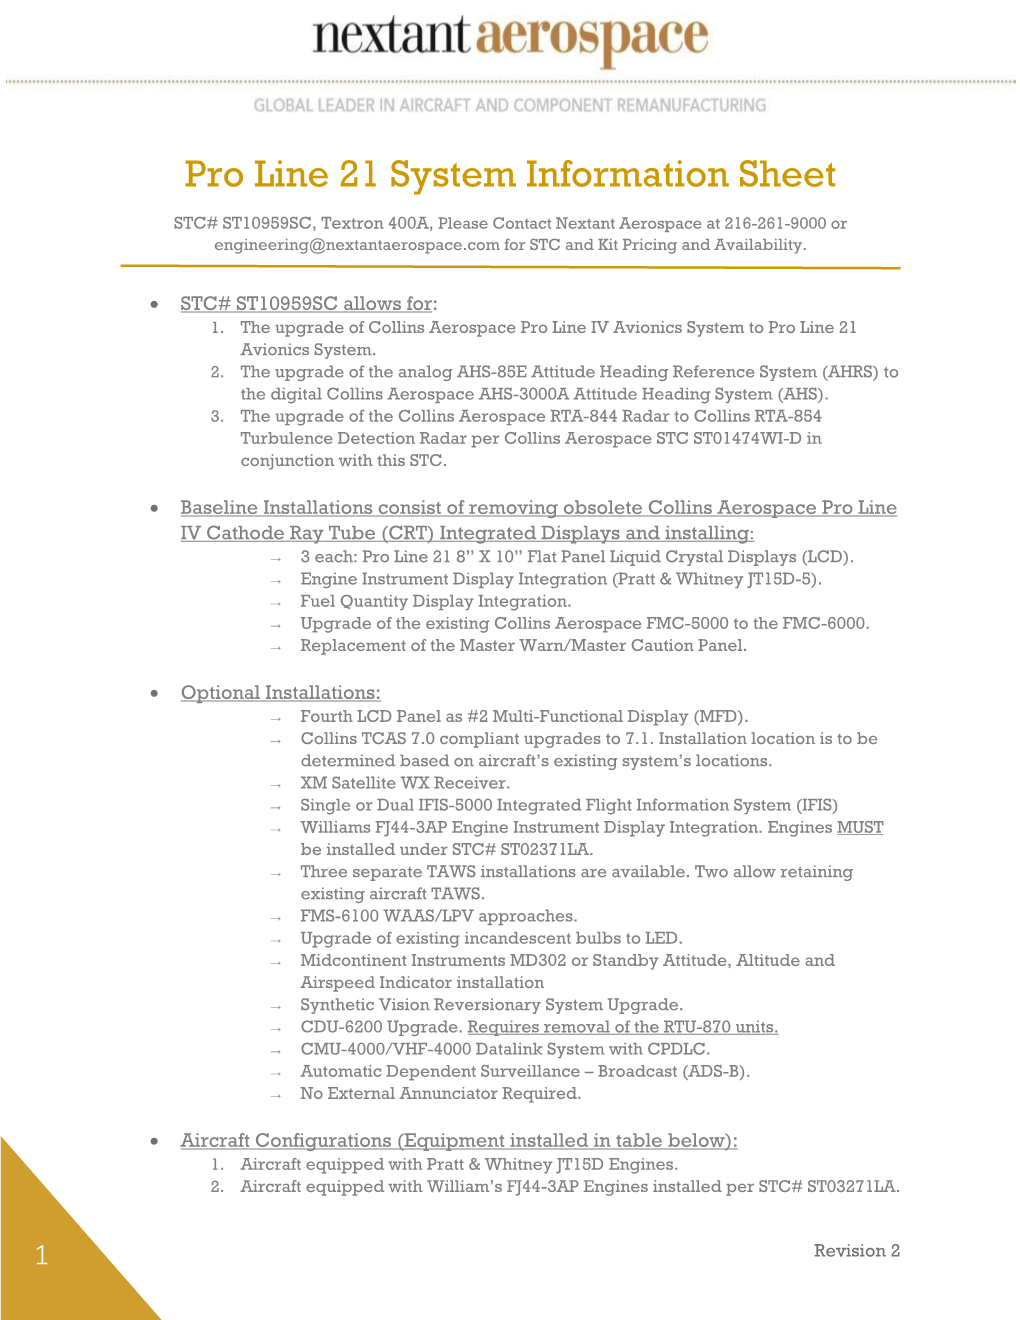 Pro Line 21 System Information Sheet